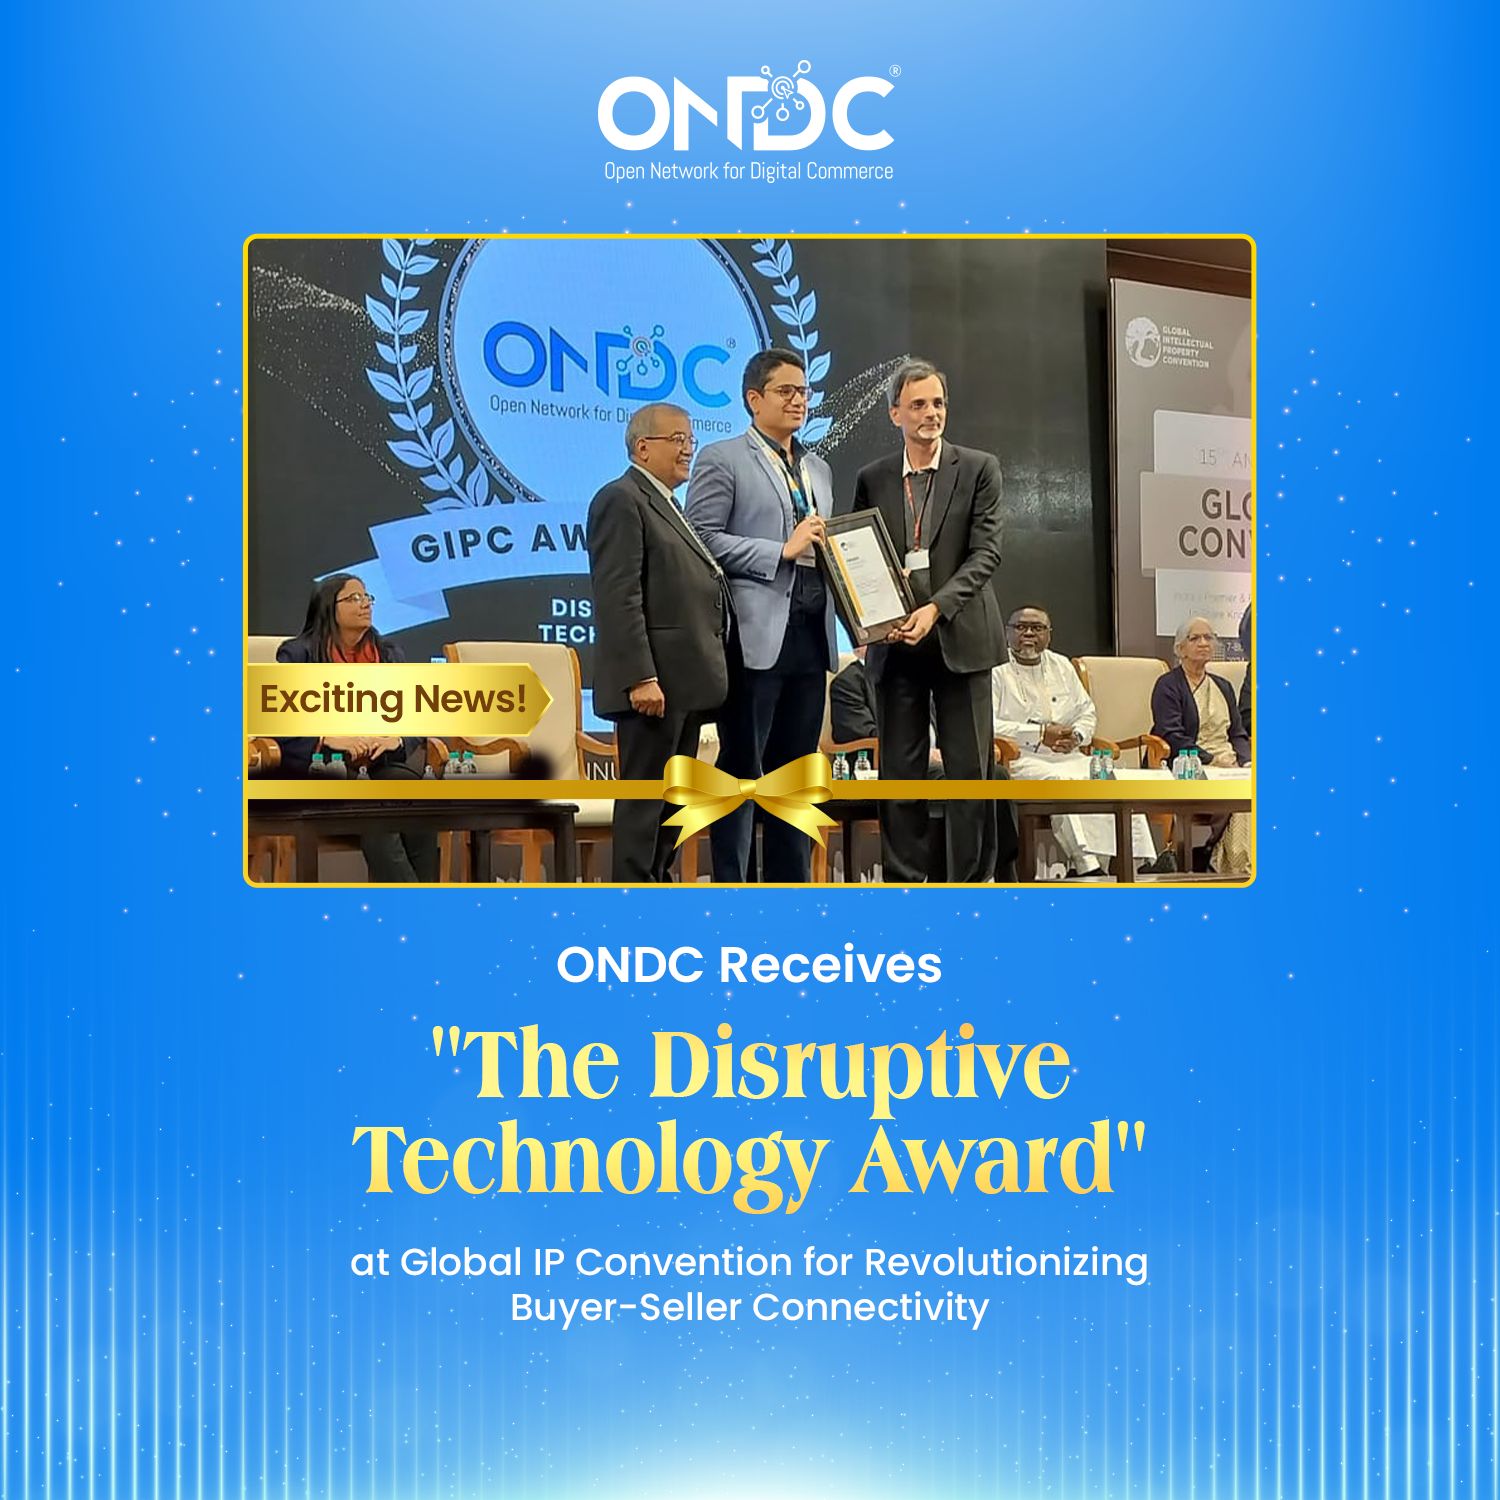 The Disruptive Technology Award